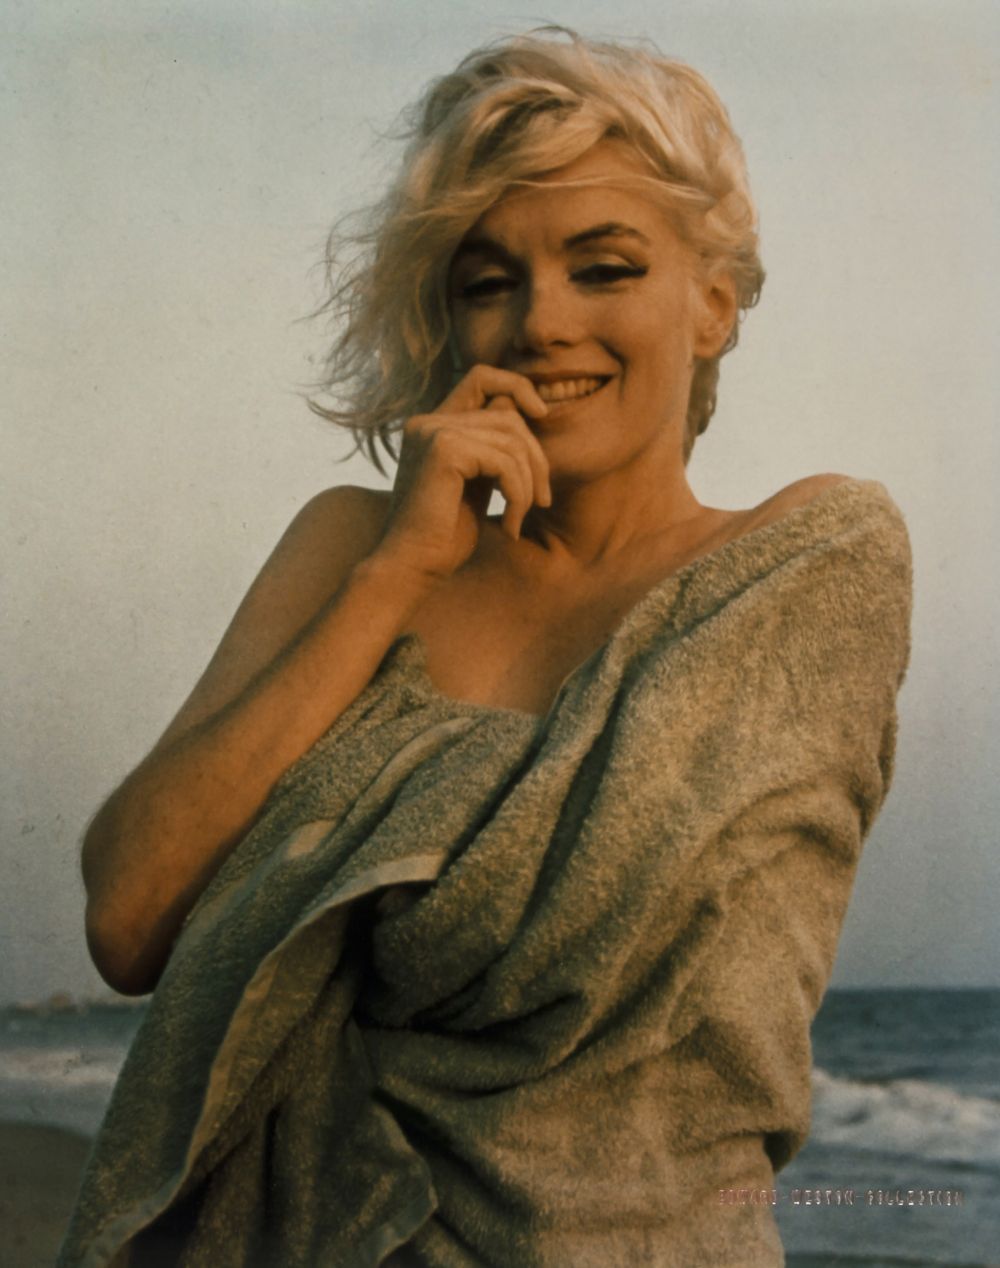 Ultima sedinta foto a lui Marilyn Monroe.Cat de frumoasa si sexy era cu doar trei saptmani inainte de moartea sa tragica